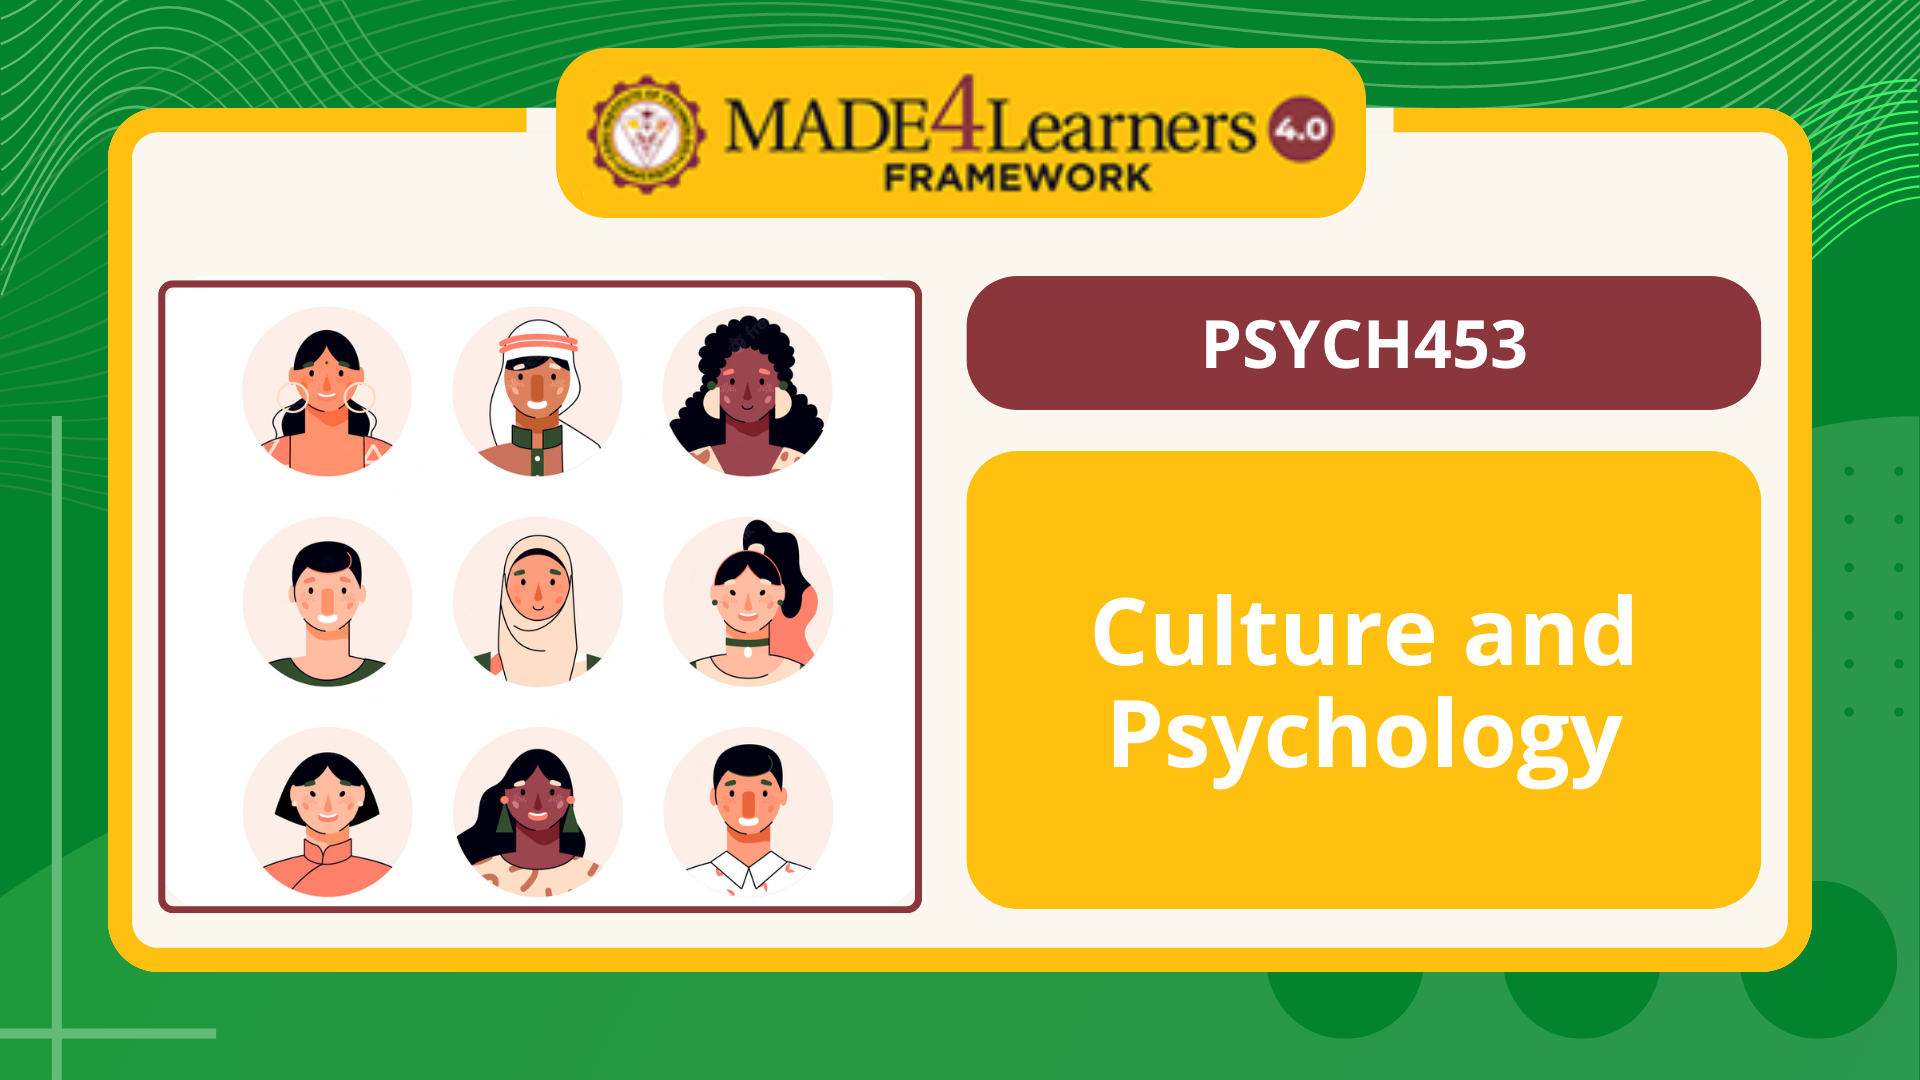 PSYCH453 Culture and Psychology (E4-C2 AP3)